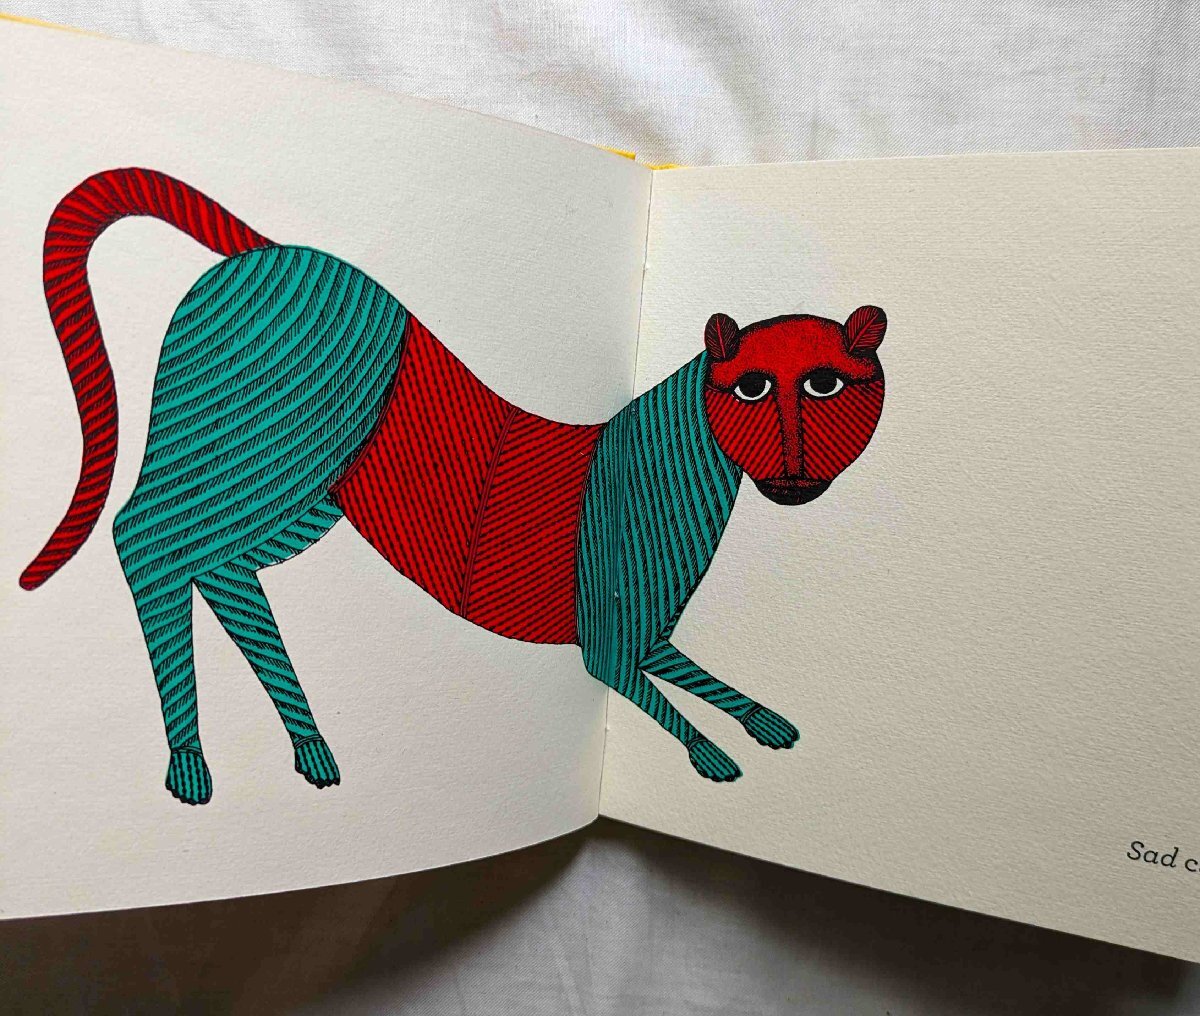  India * cod books cat book@ silk screen * print attaching limitation hand bookbinding I Like Cats Anushka Ravishankar Tara Books cat * illustration 